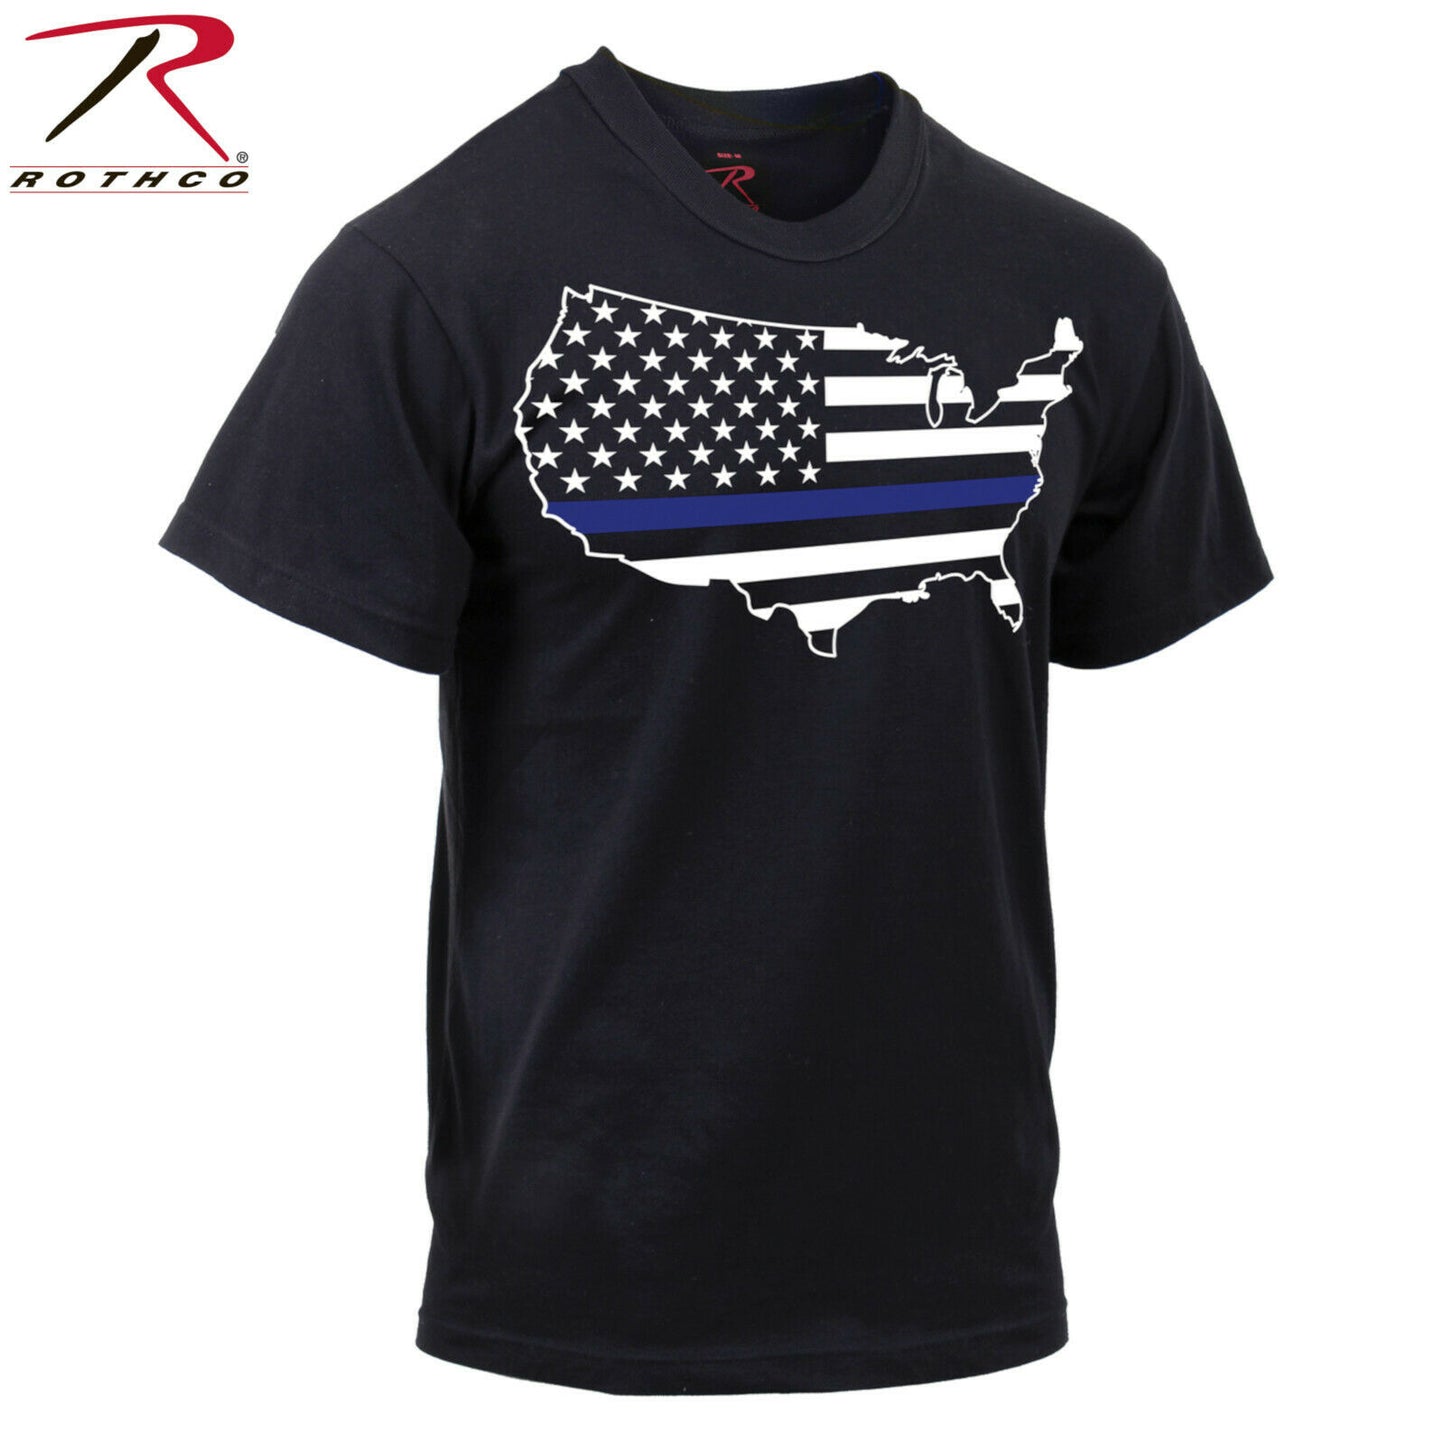 Rothco Thin Blue Line America Map T-Shirt - Men's Black TBL America Tee